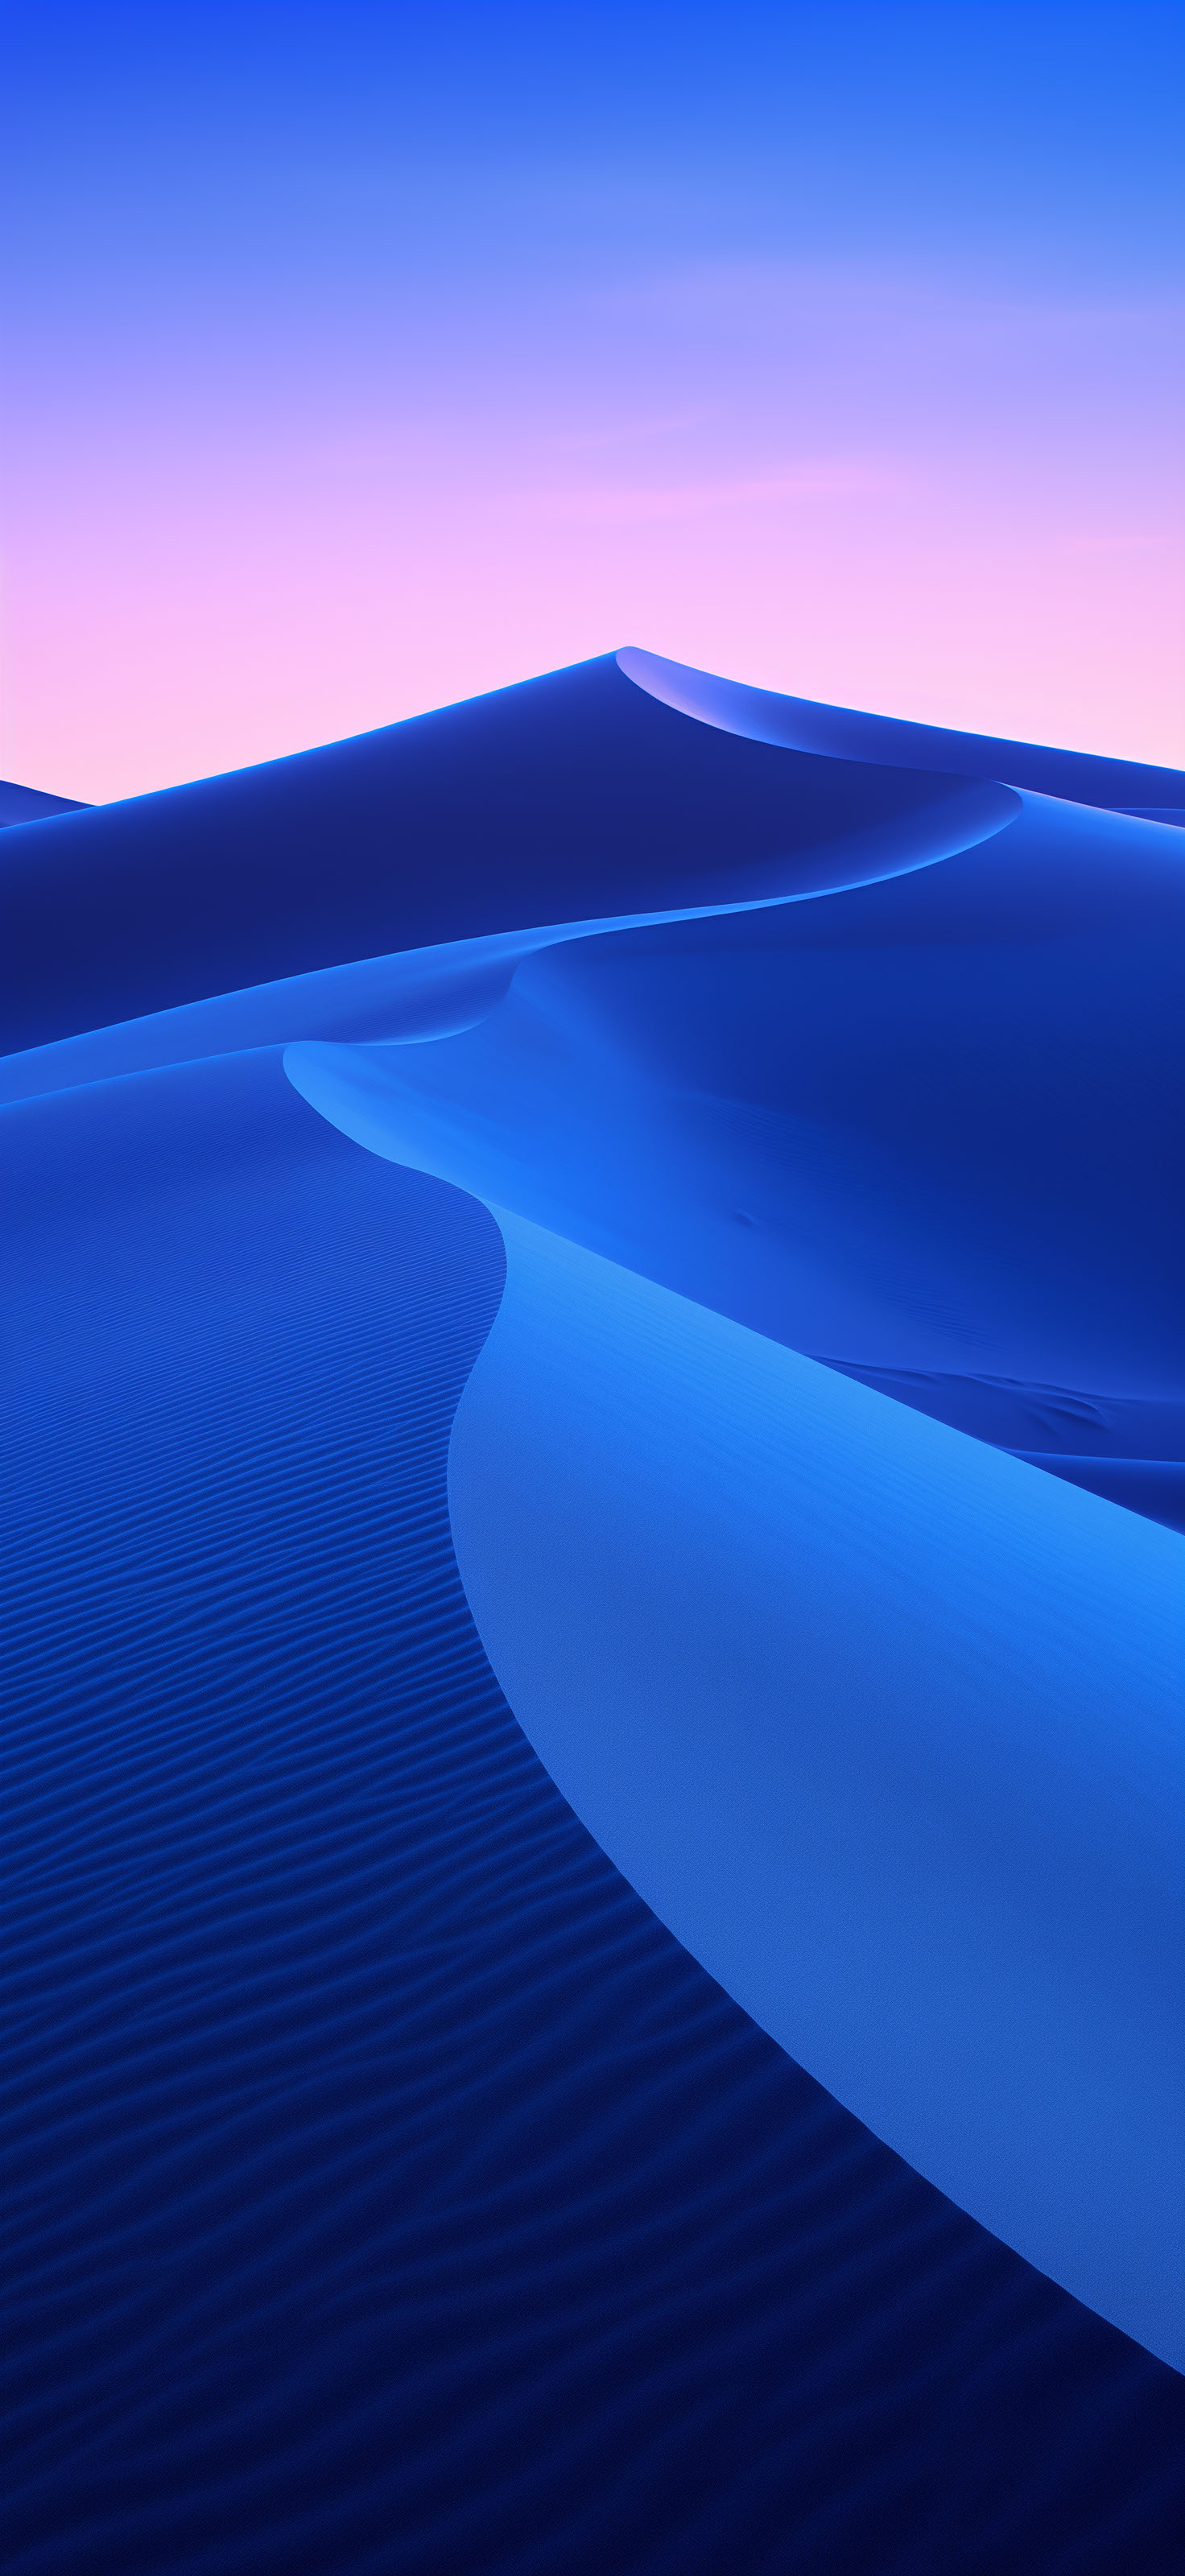 General 1472x3200 AI art desert dunes sand portrait display digital art Blue hour sky